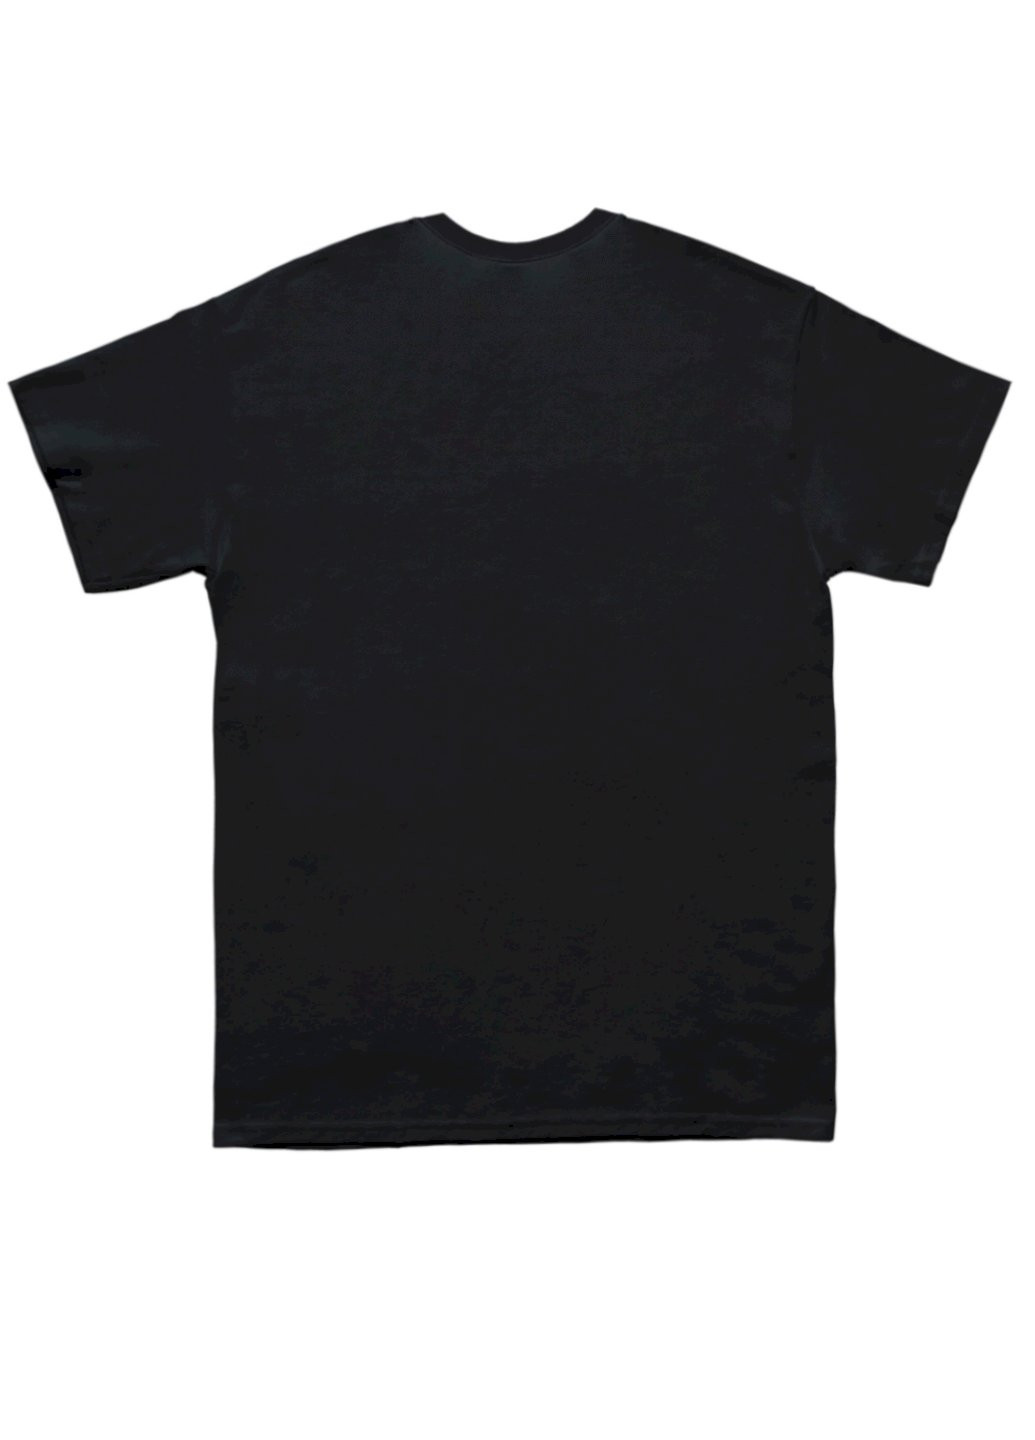 Черная футболка мужская черная "earth" Trace of Space